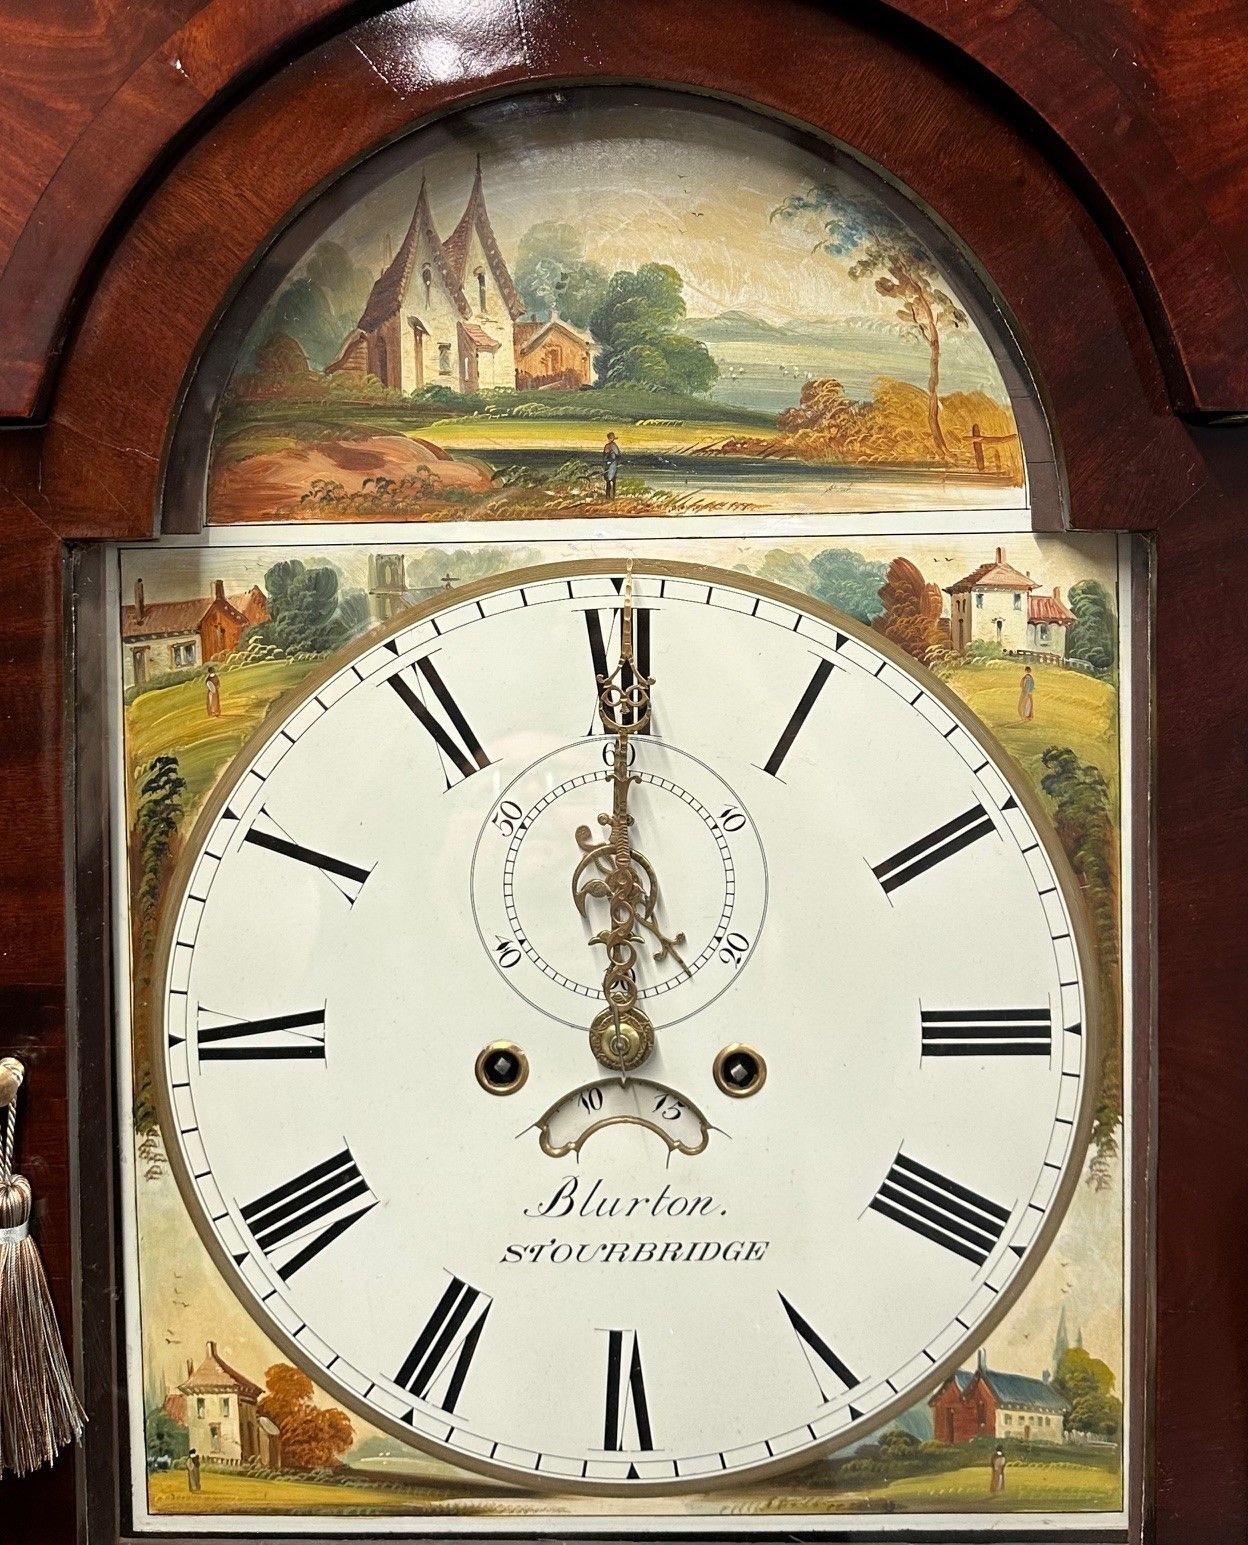 John Blurton Grandfather Clock